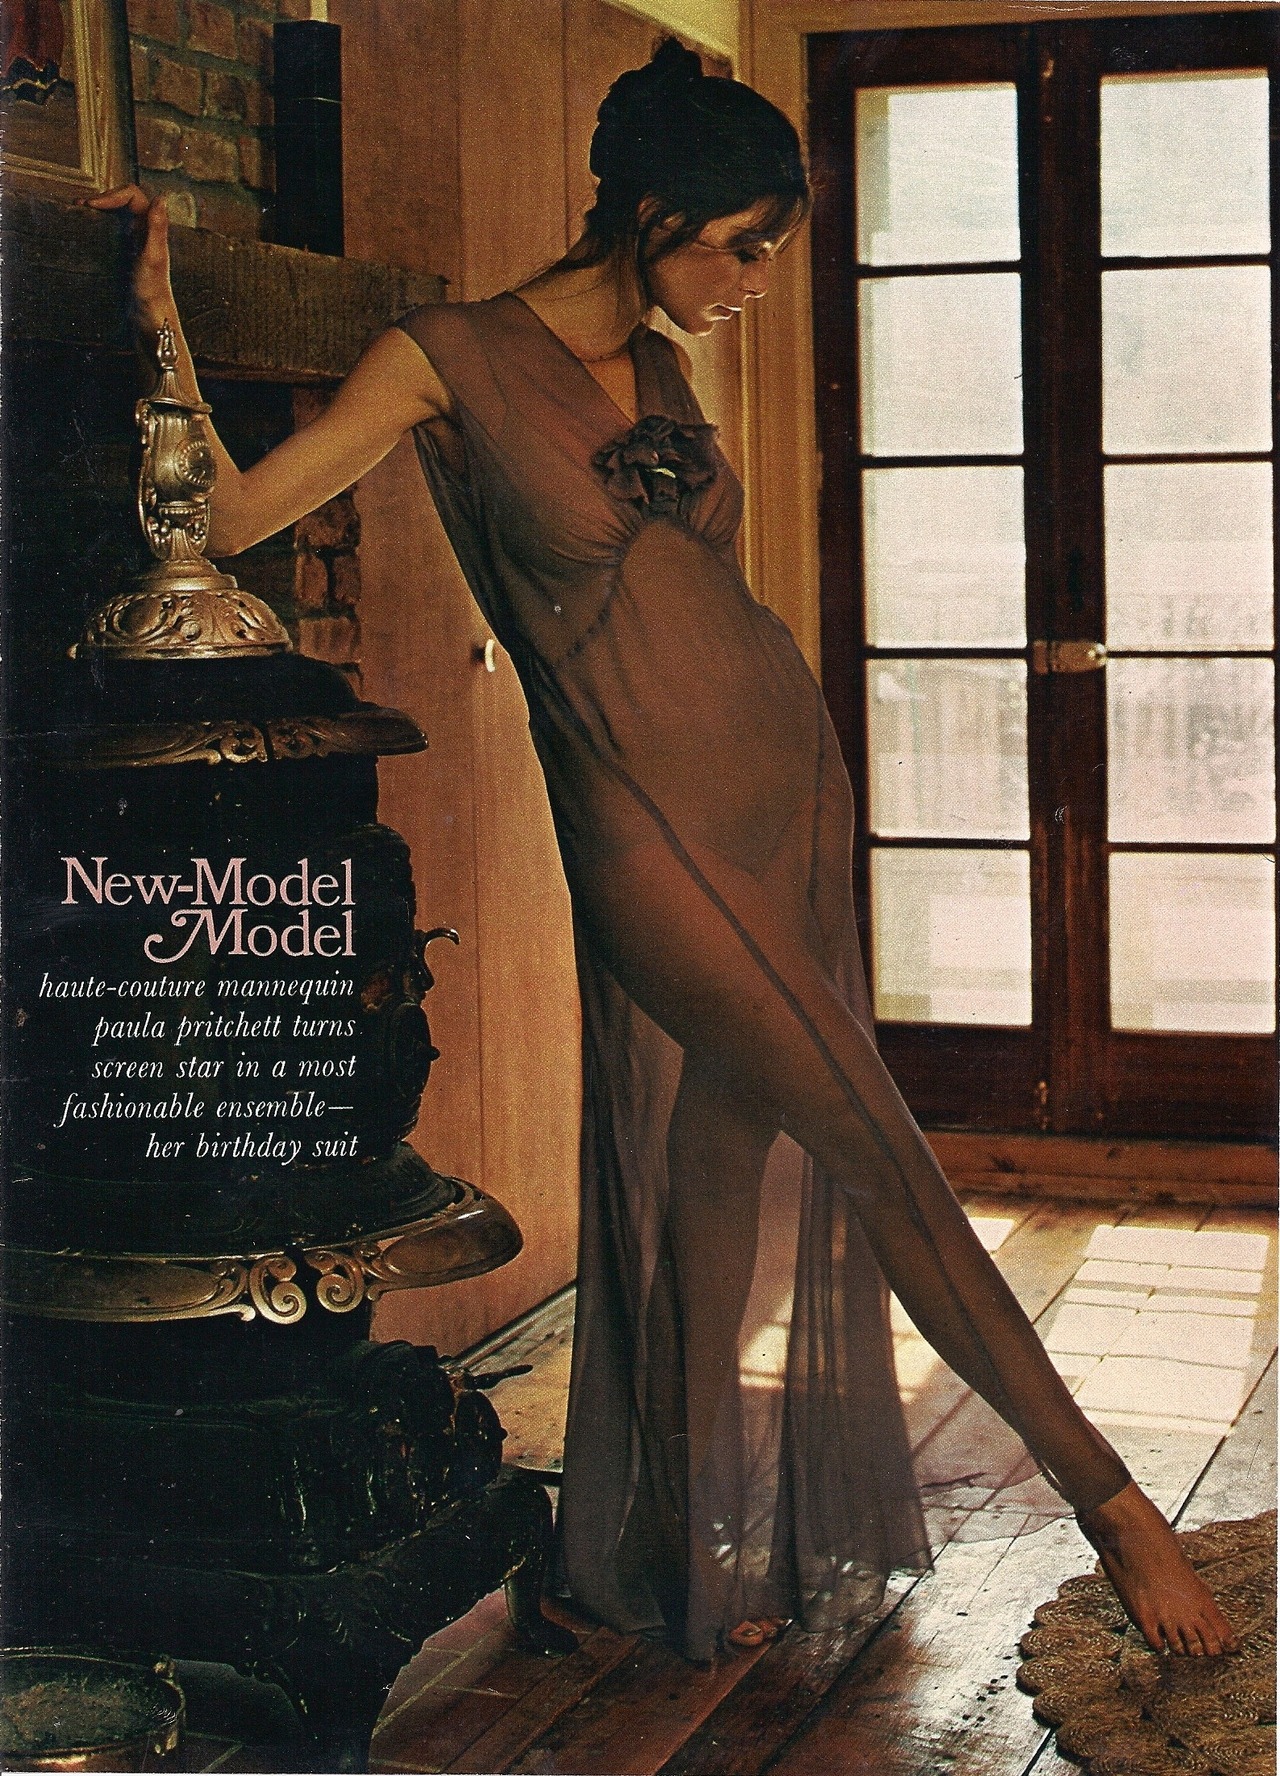 Paula Pritchett, &ldquo;New-Model Model,&rdquo; Playboy - September 1970